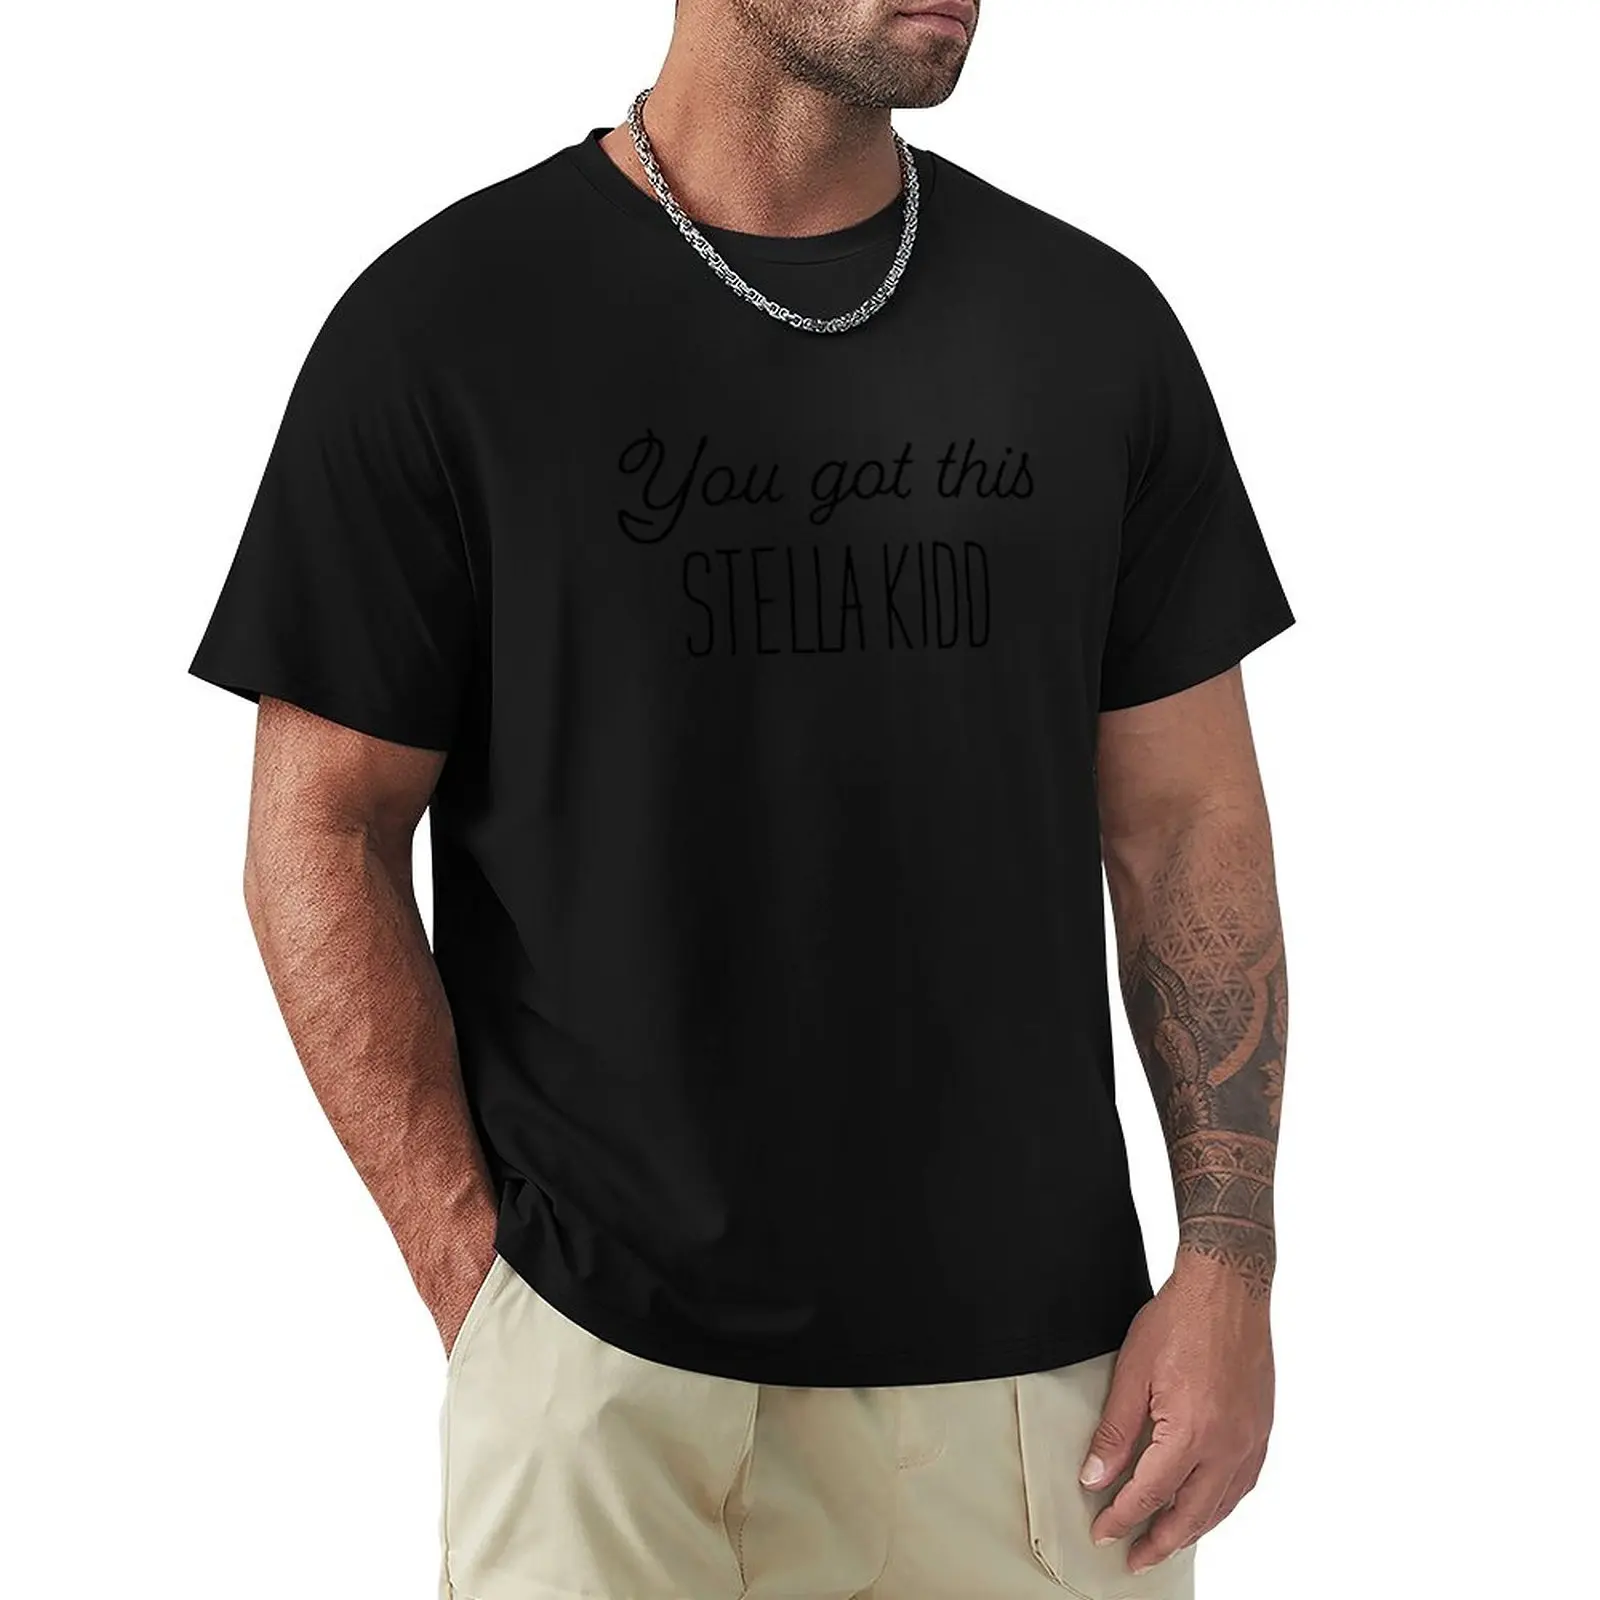 

Футболка с надписью «You got this Stella Kidd», аниме одежда, летняя одежда, заготовки, мужские футболки